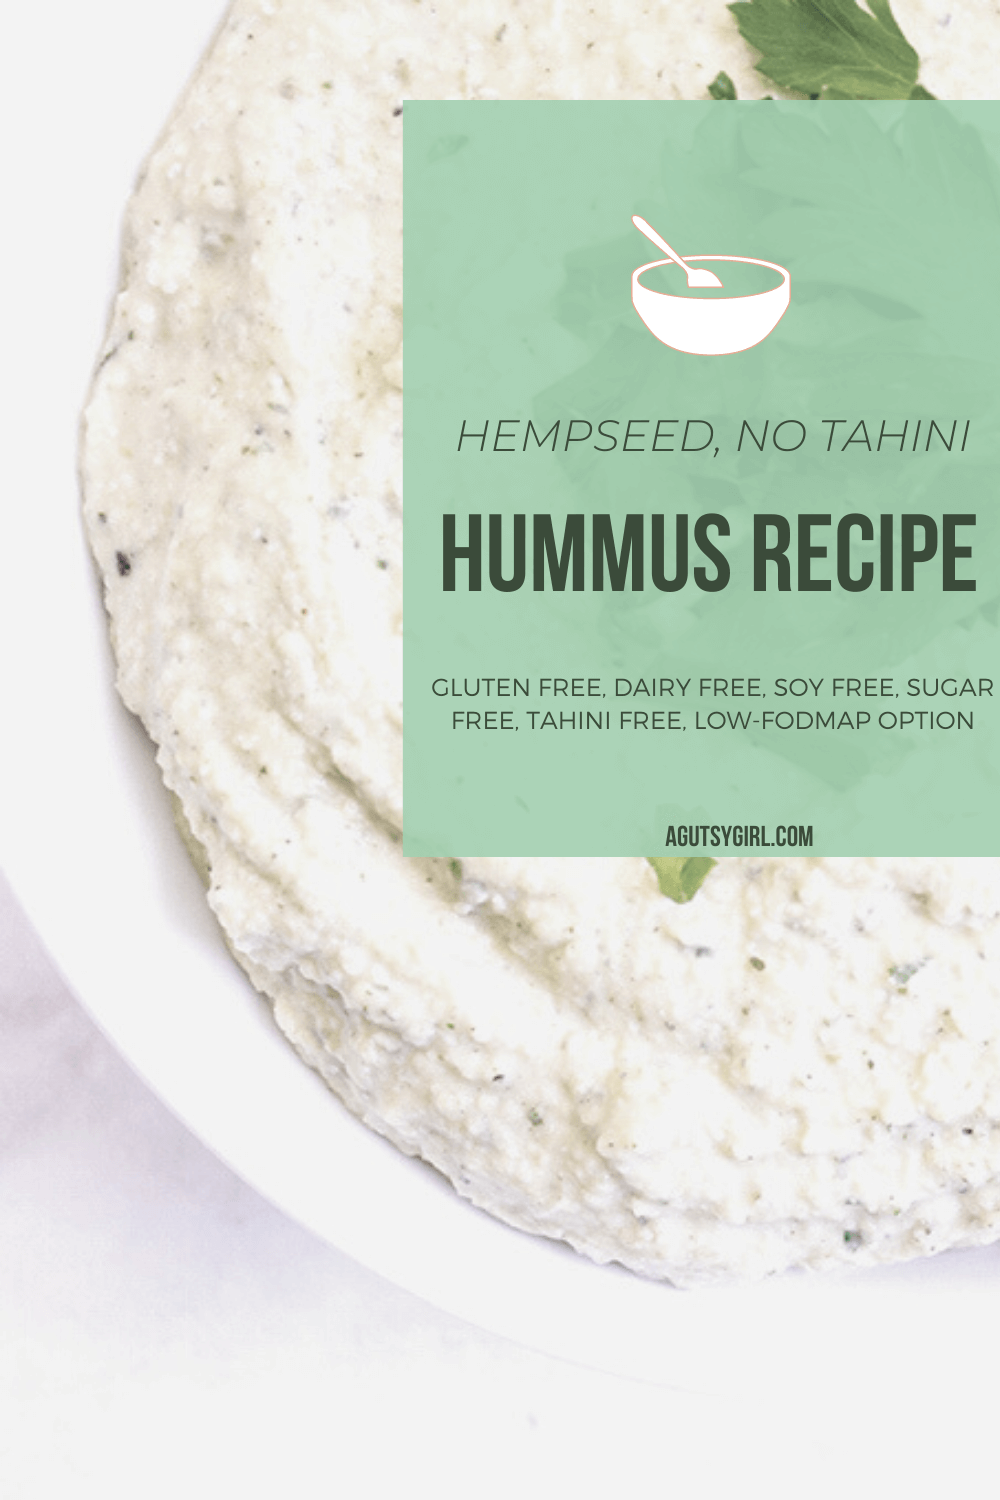 Hummus Recipe no tahini hempseed dairy free agutsygirl.com #glutenfree #dairyfree #diy #hummus